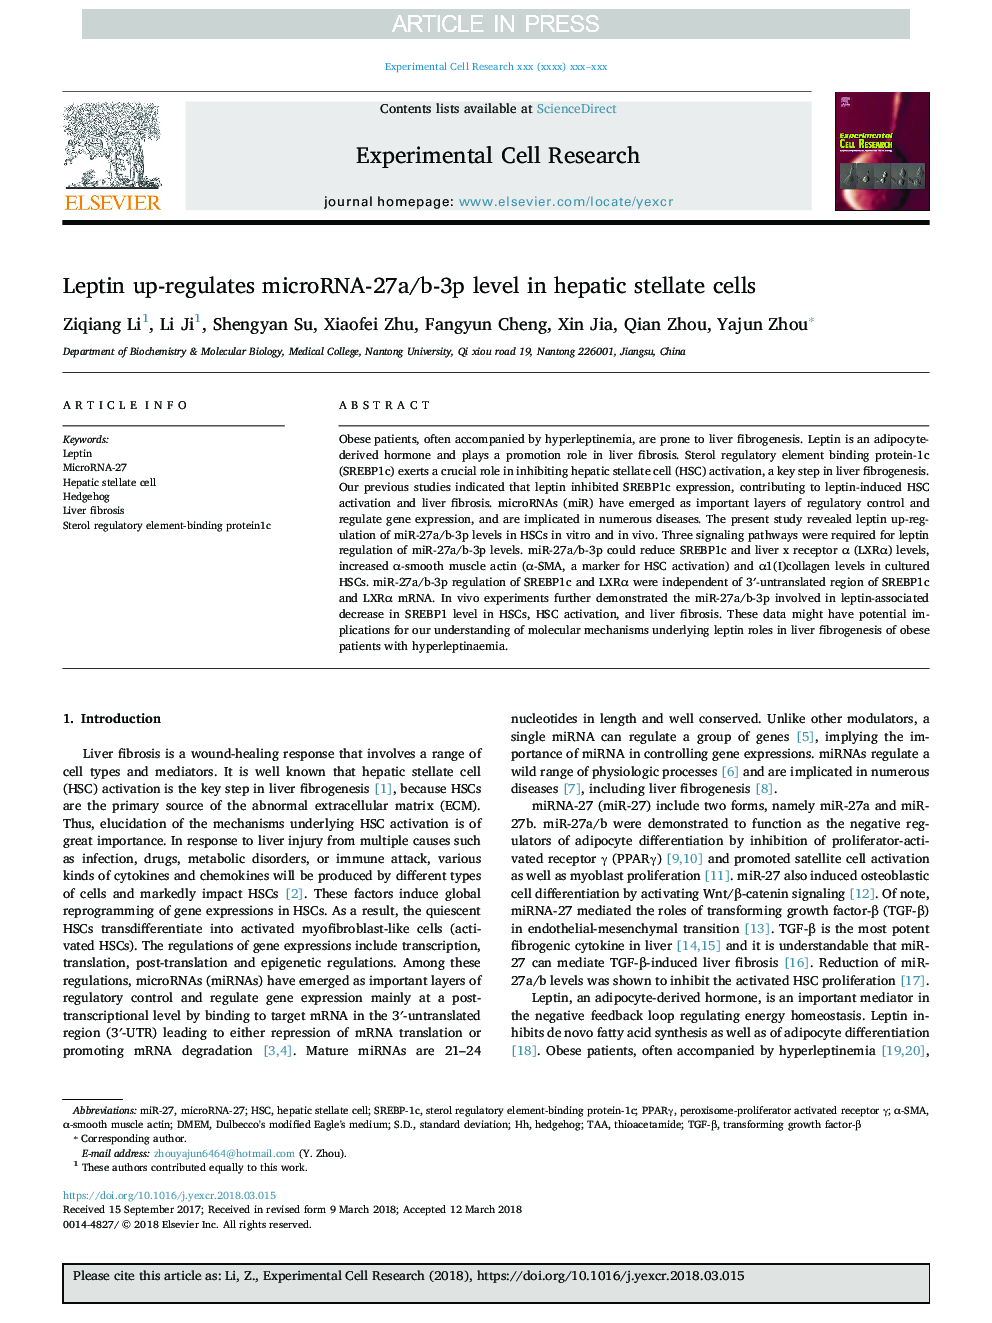 Leptin up-regulates microRNA-27a/b-3p level in hepatic stellate cells